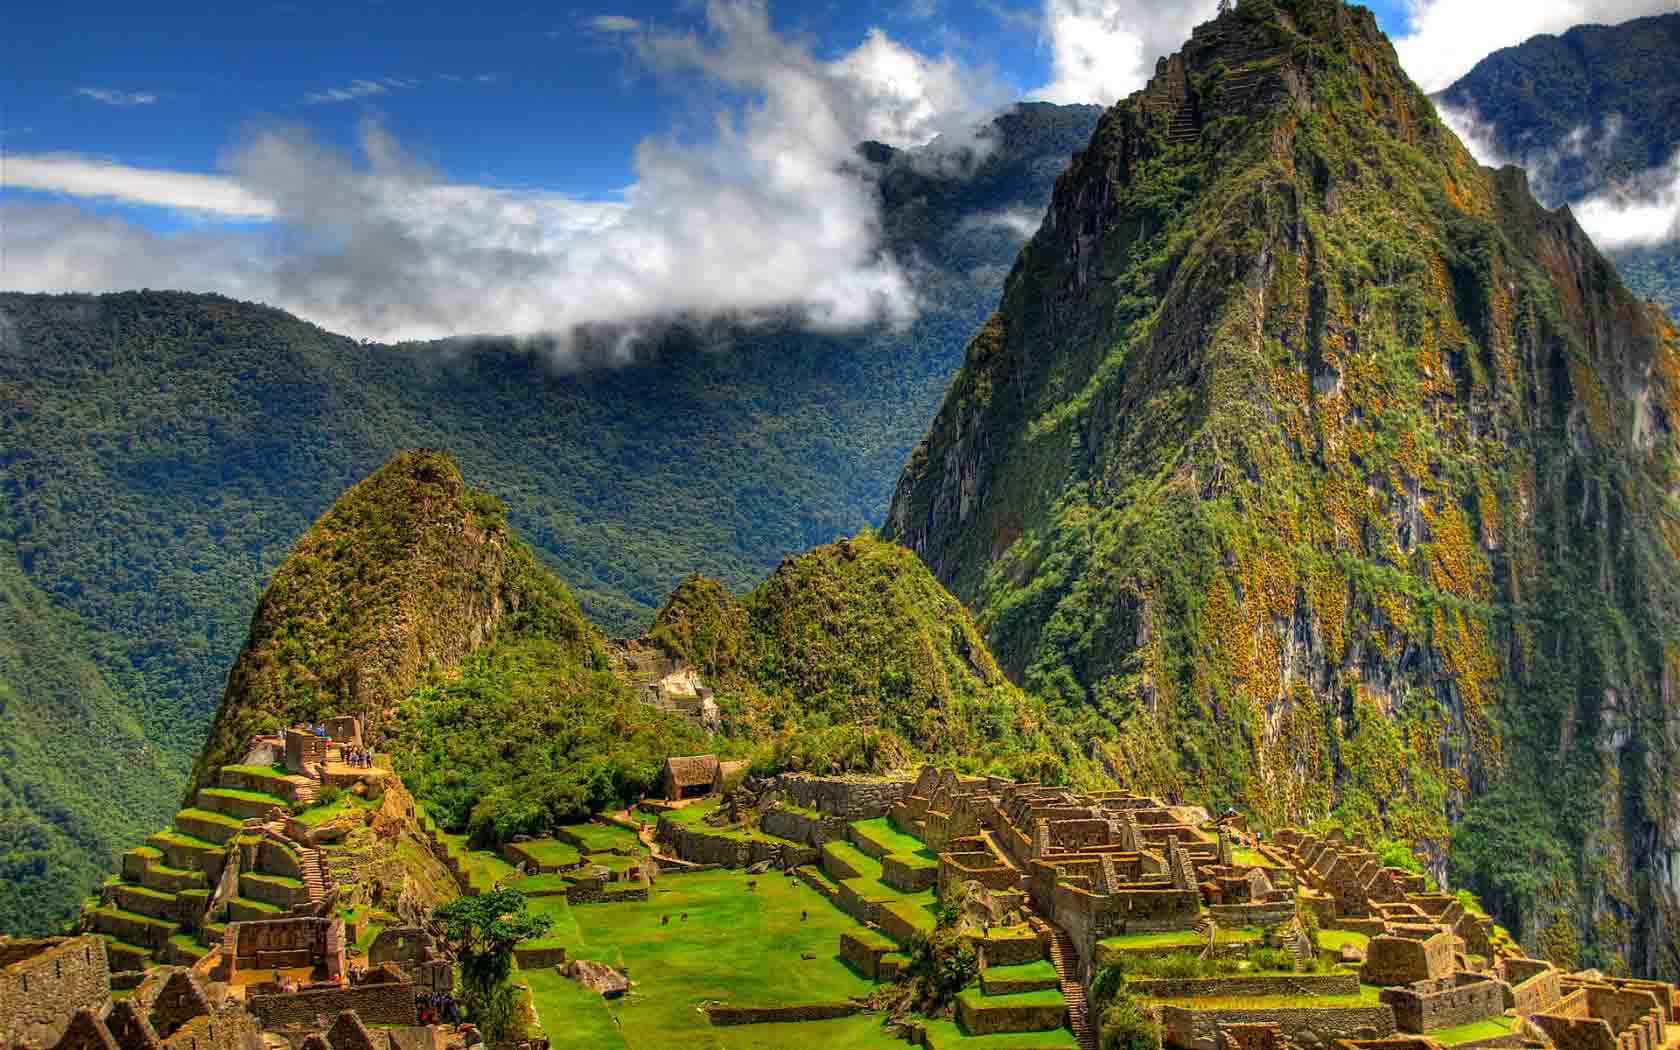  Machu Picchu | Exploring Deep: Amazon and Machu Picchu Tours Revealed